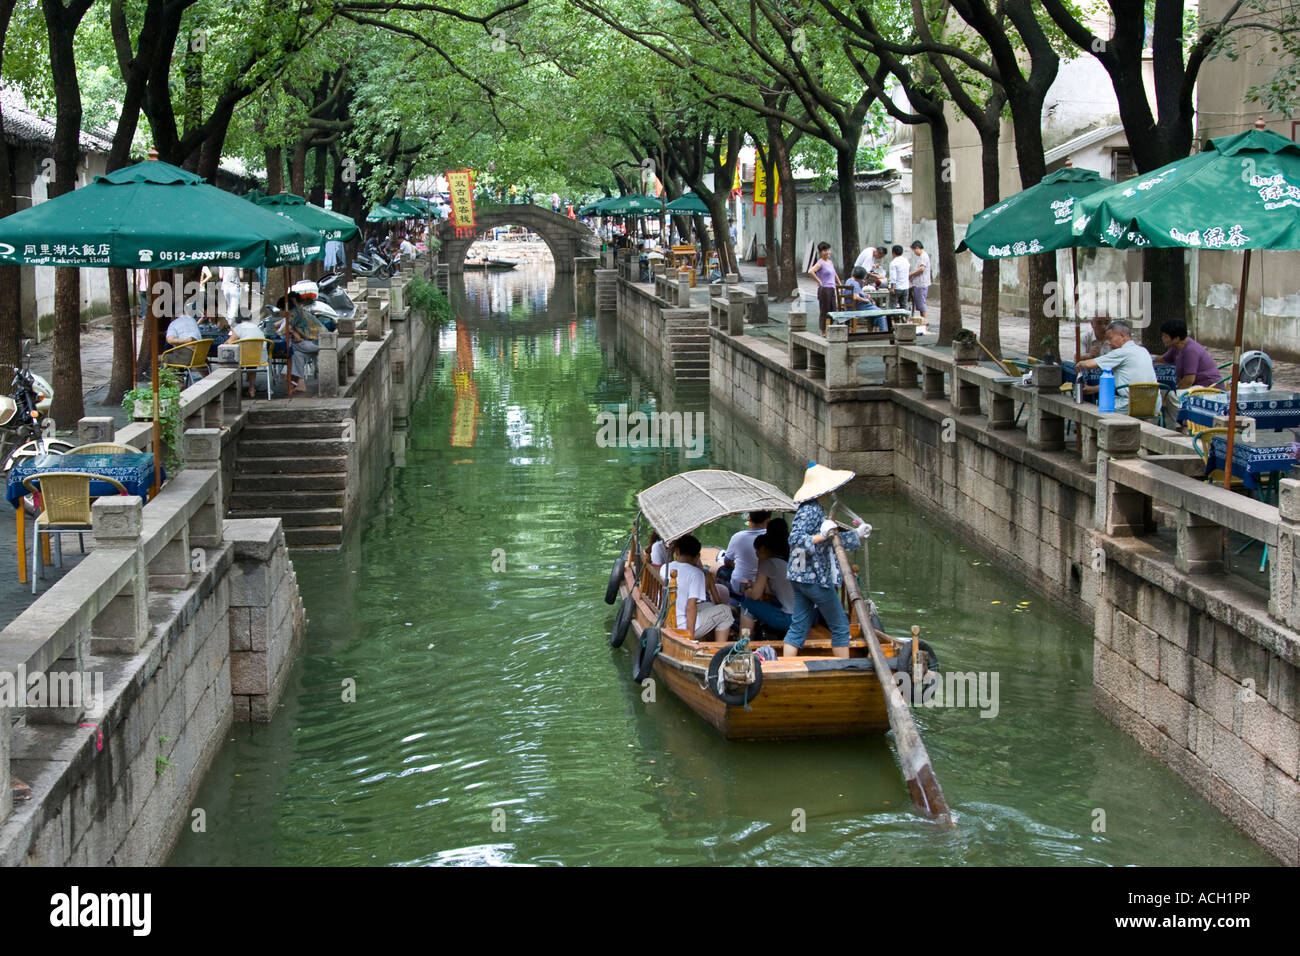 Ristoranti Canal Linea Donna a remi in barca in legno Tongli città d'acqua Cina Foto Stock